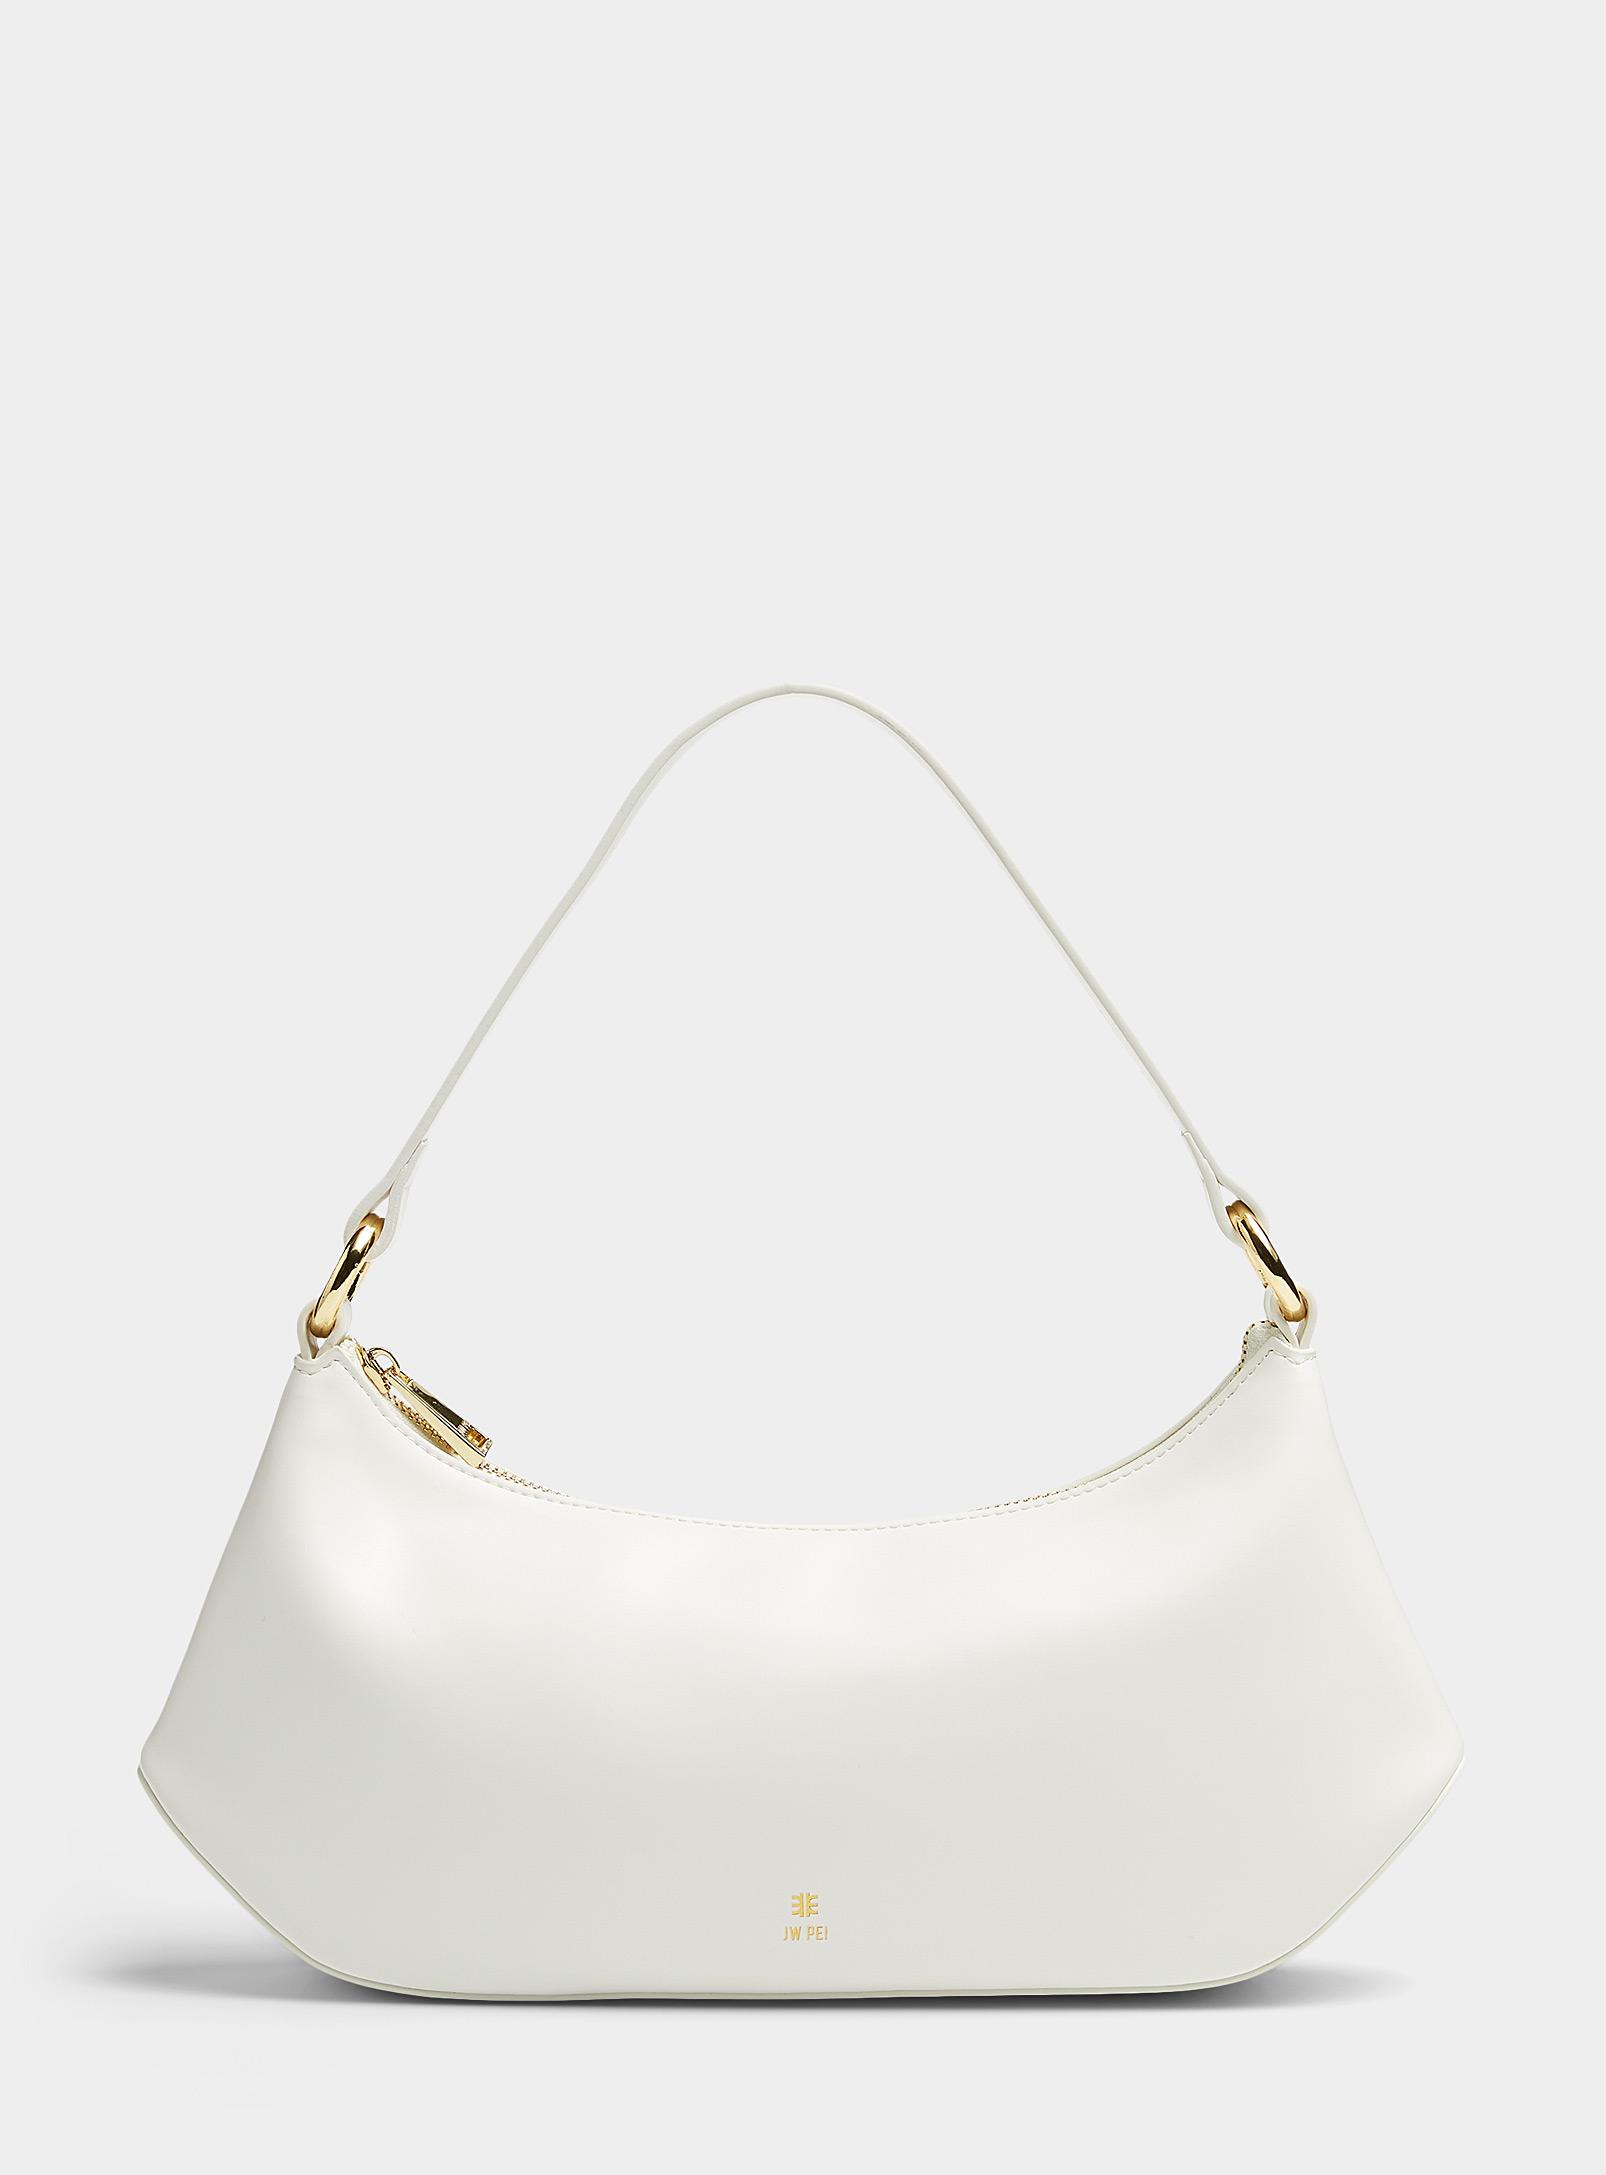 Lily Shoulder Bag - White Online Shopping - JW Pei